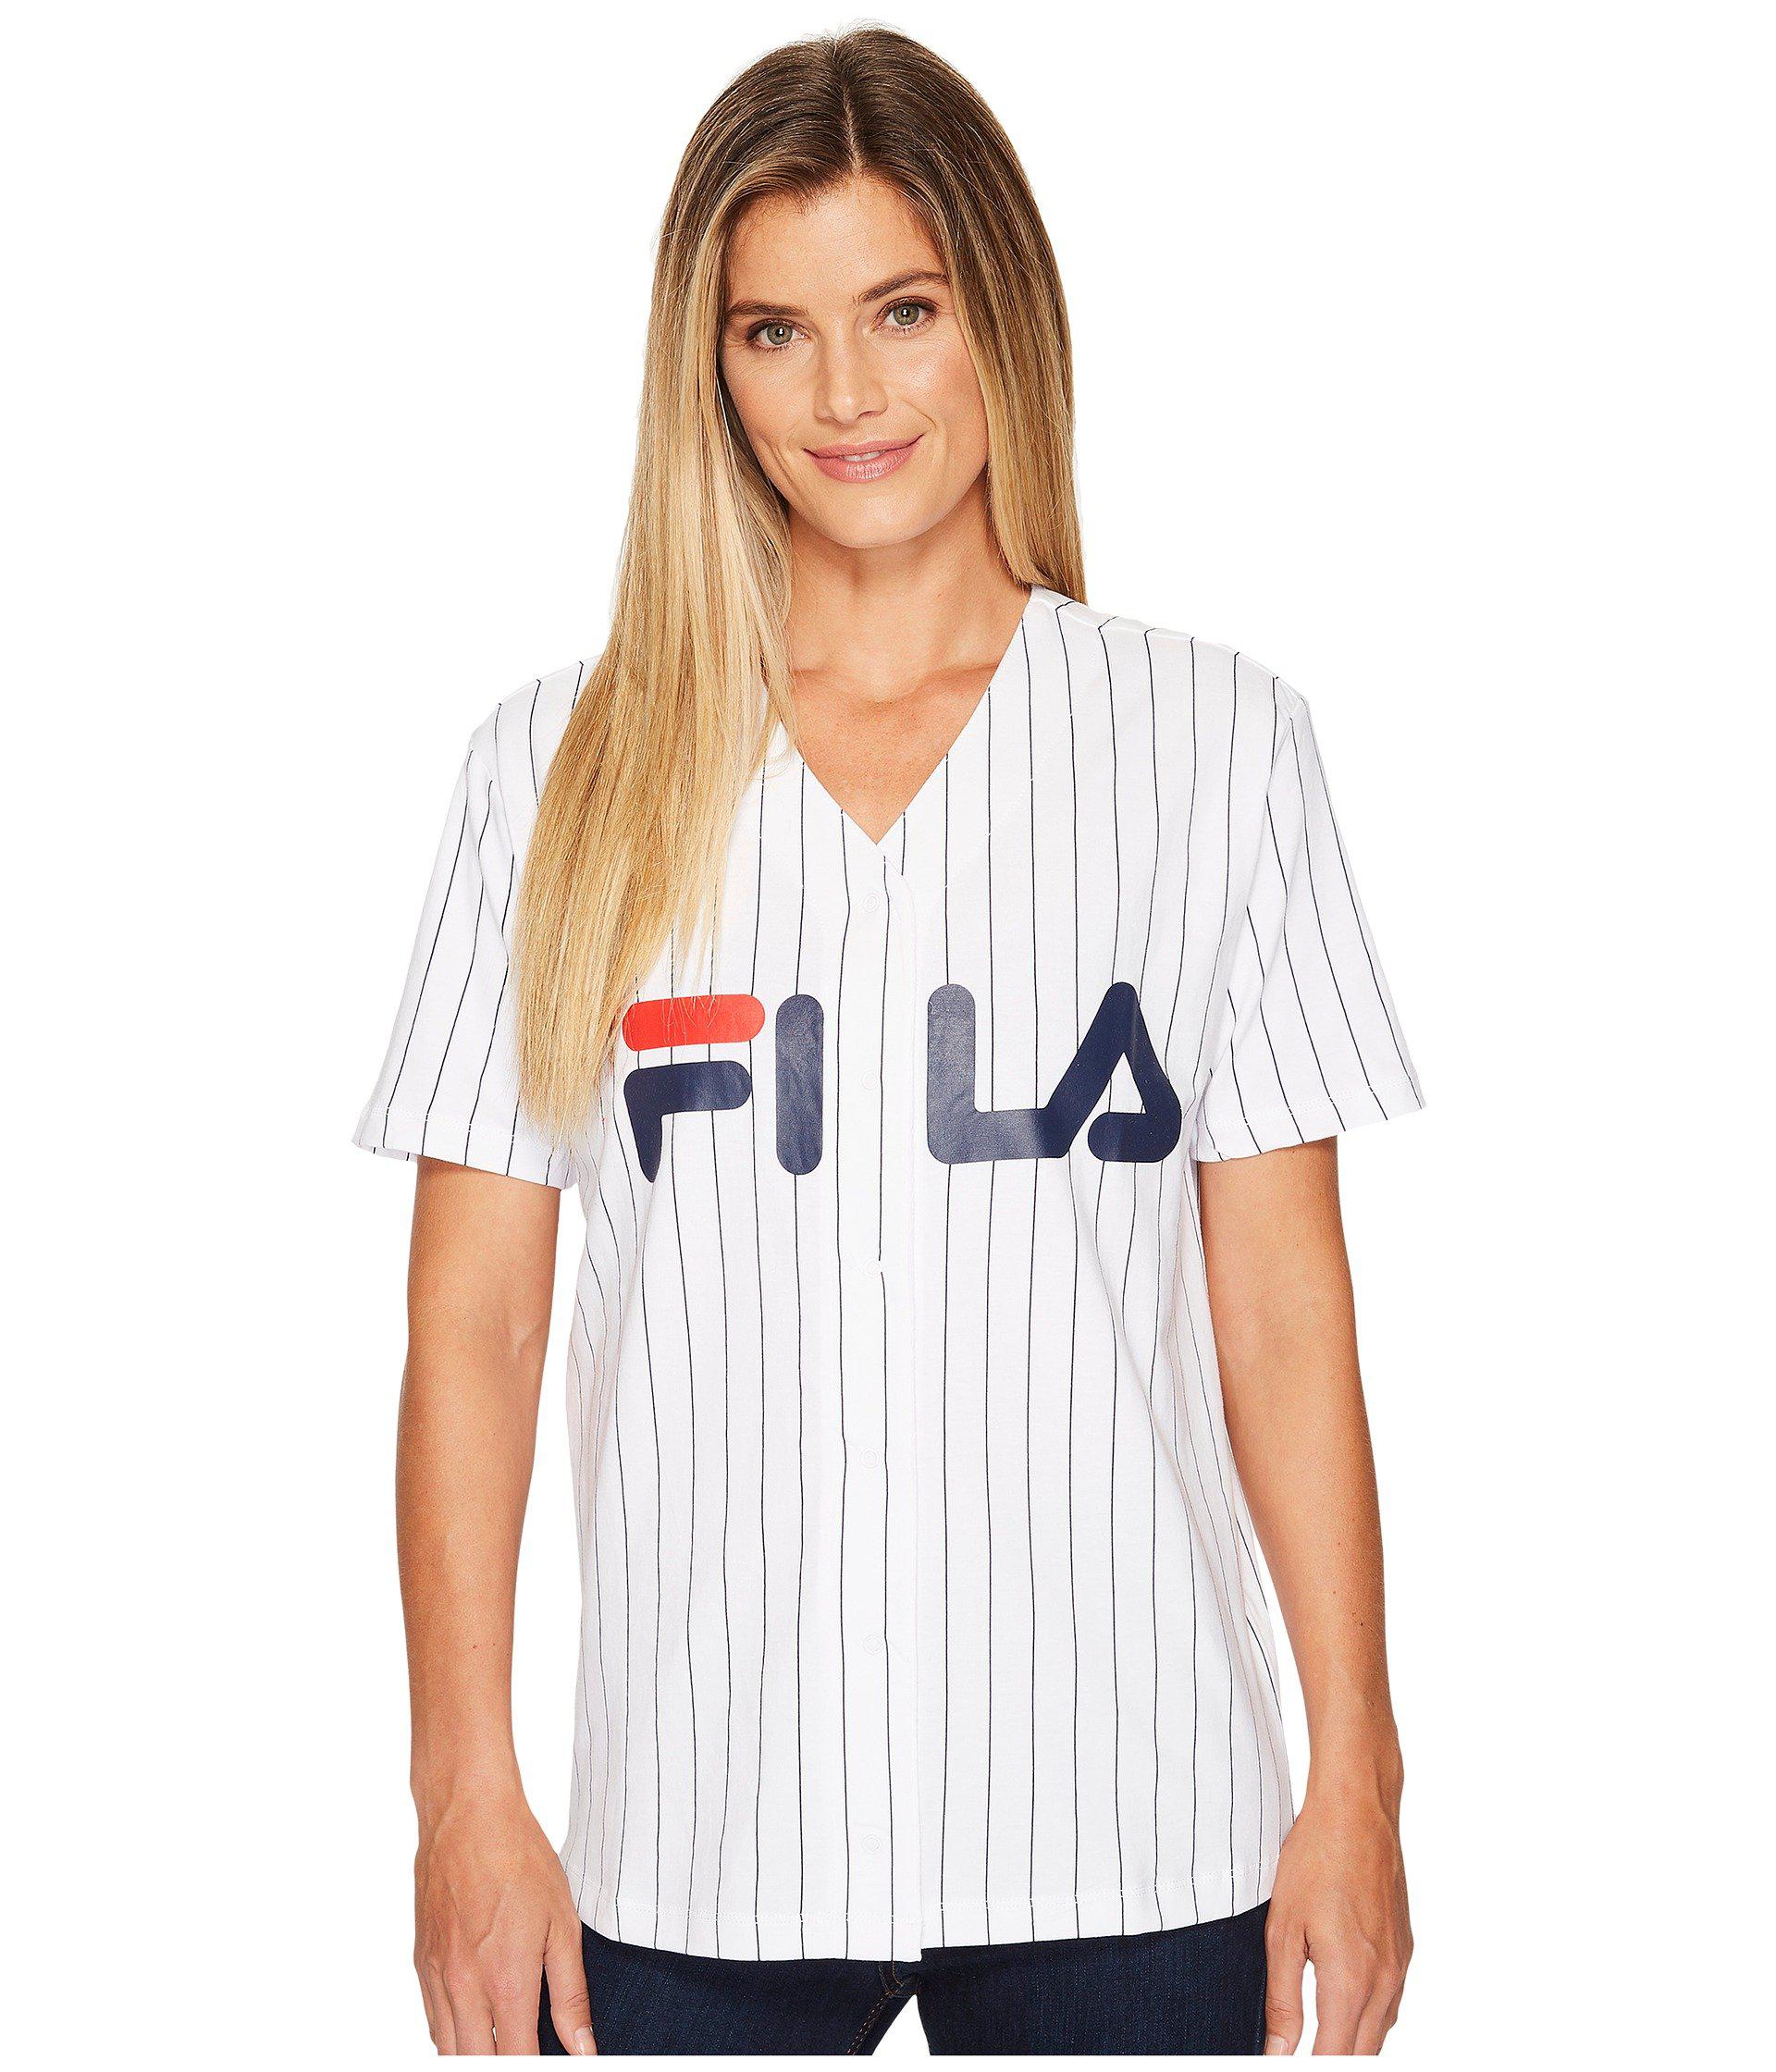 fila baseball jersey womens Shop Clothing & Shoes Online